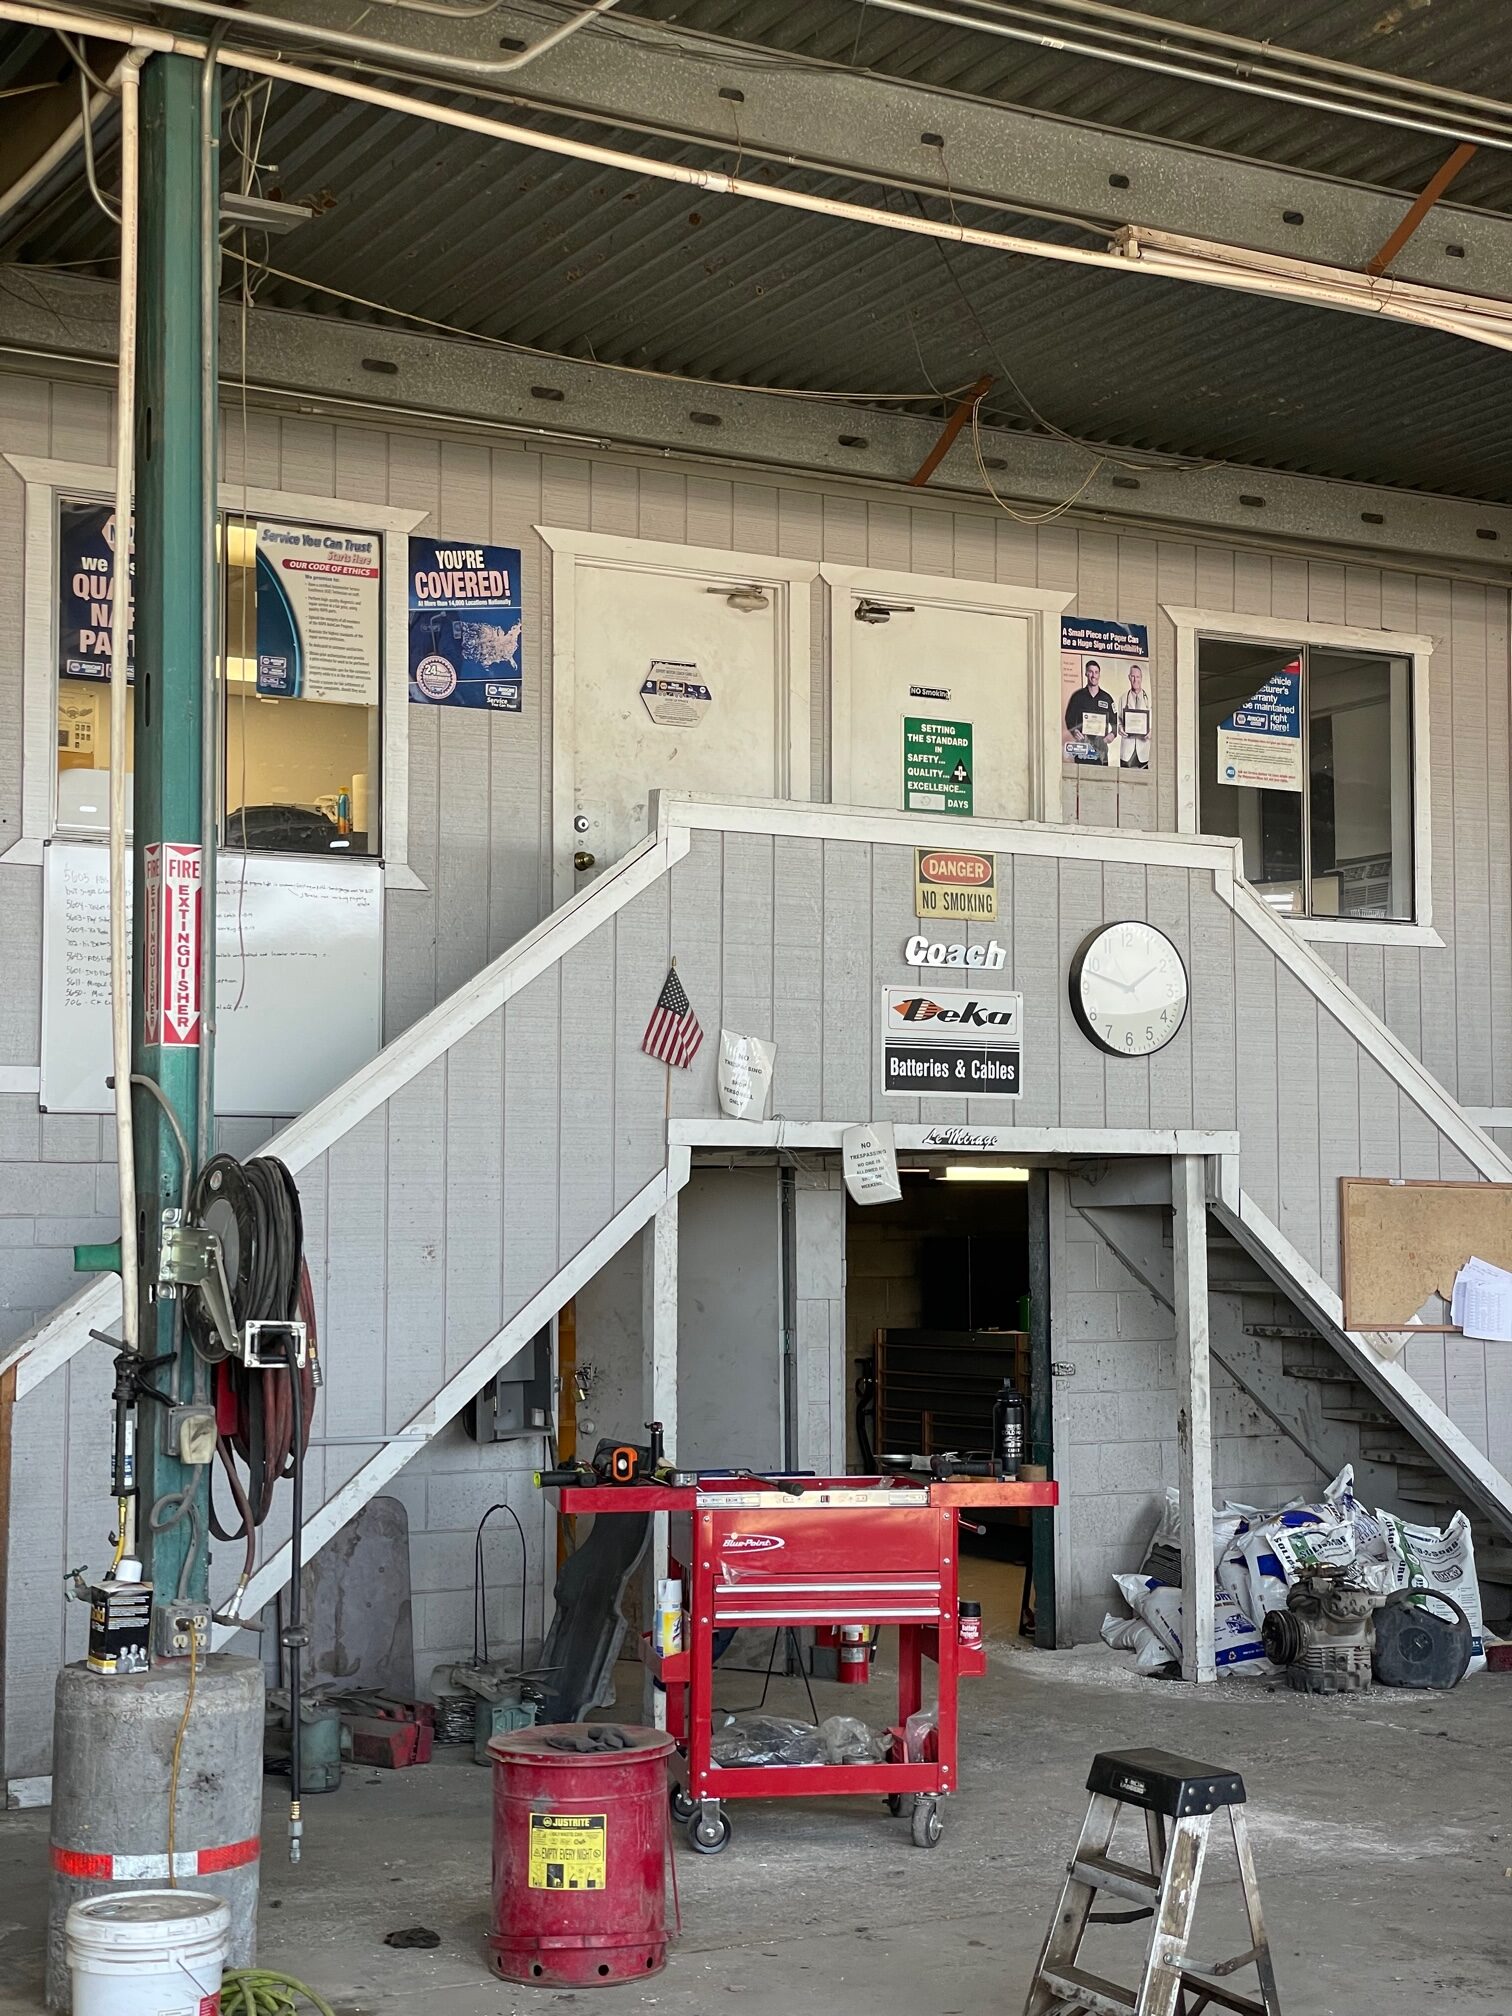 Coach Care Center Diesel Mechanic shop office in Arizona